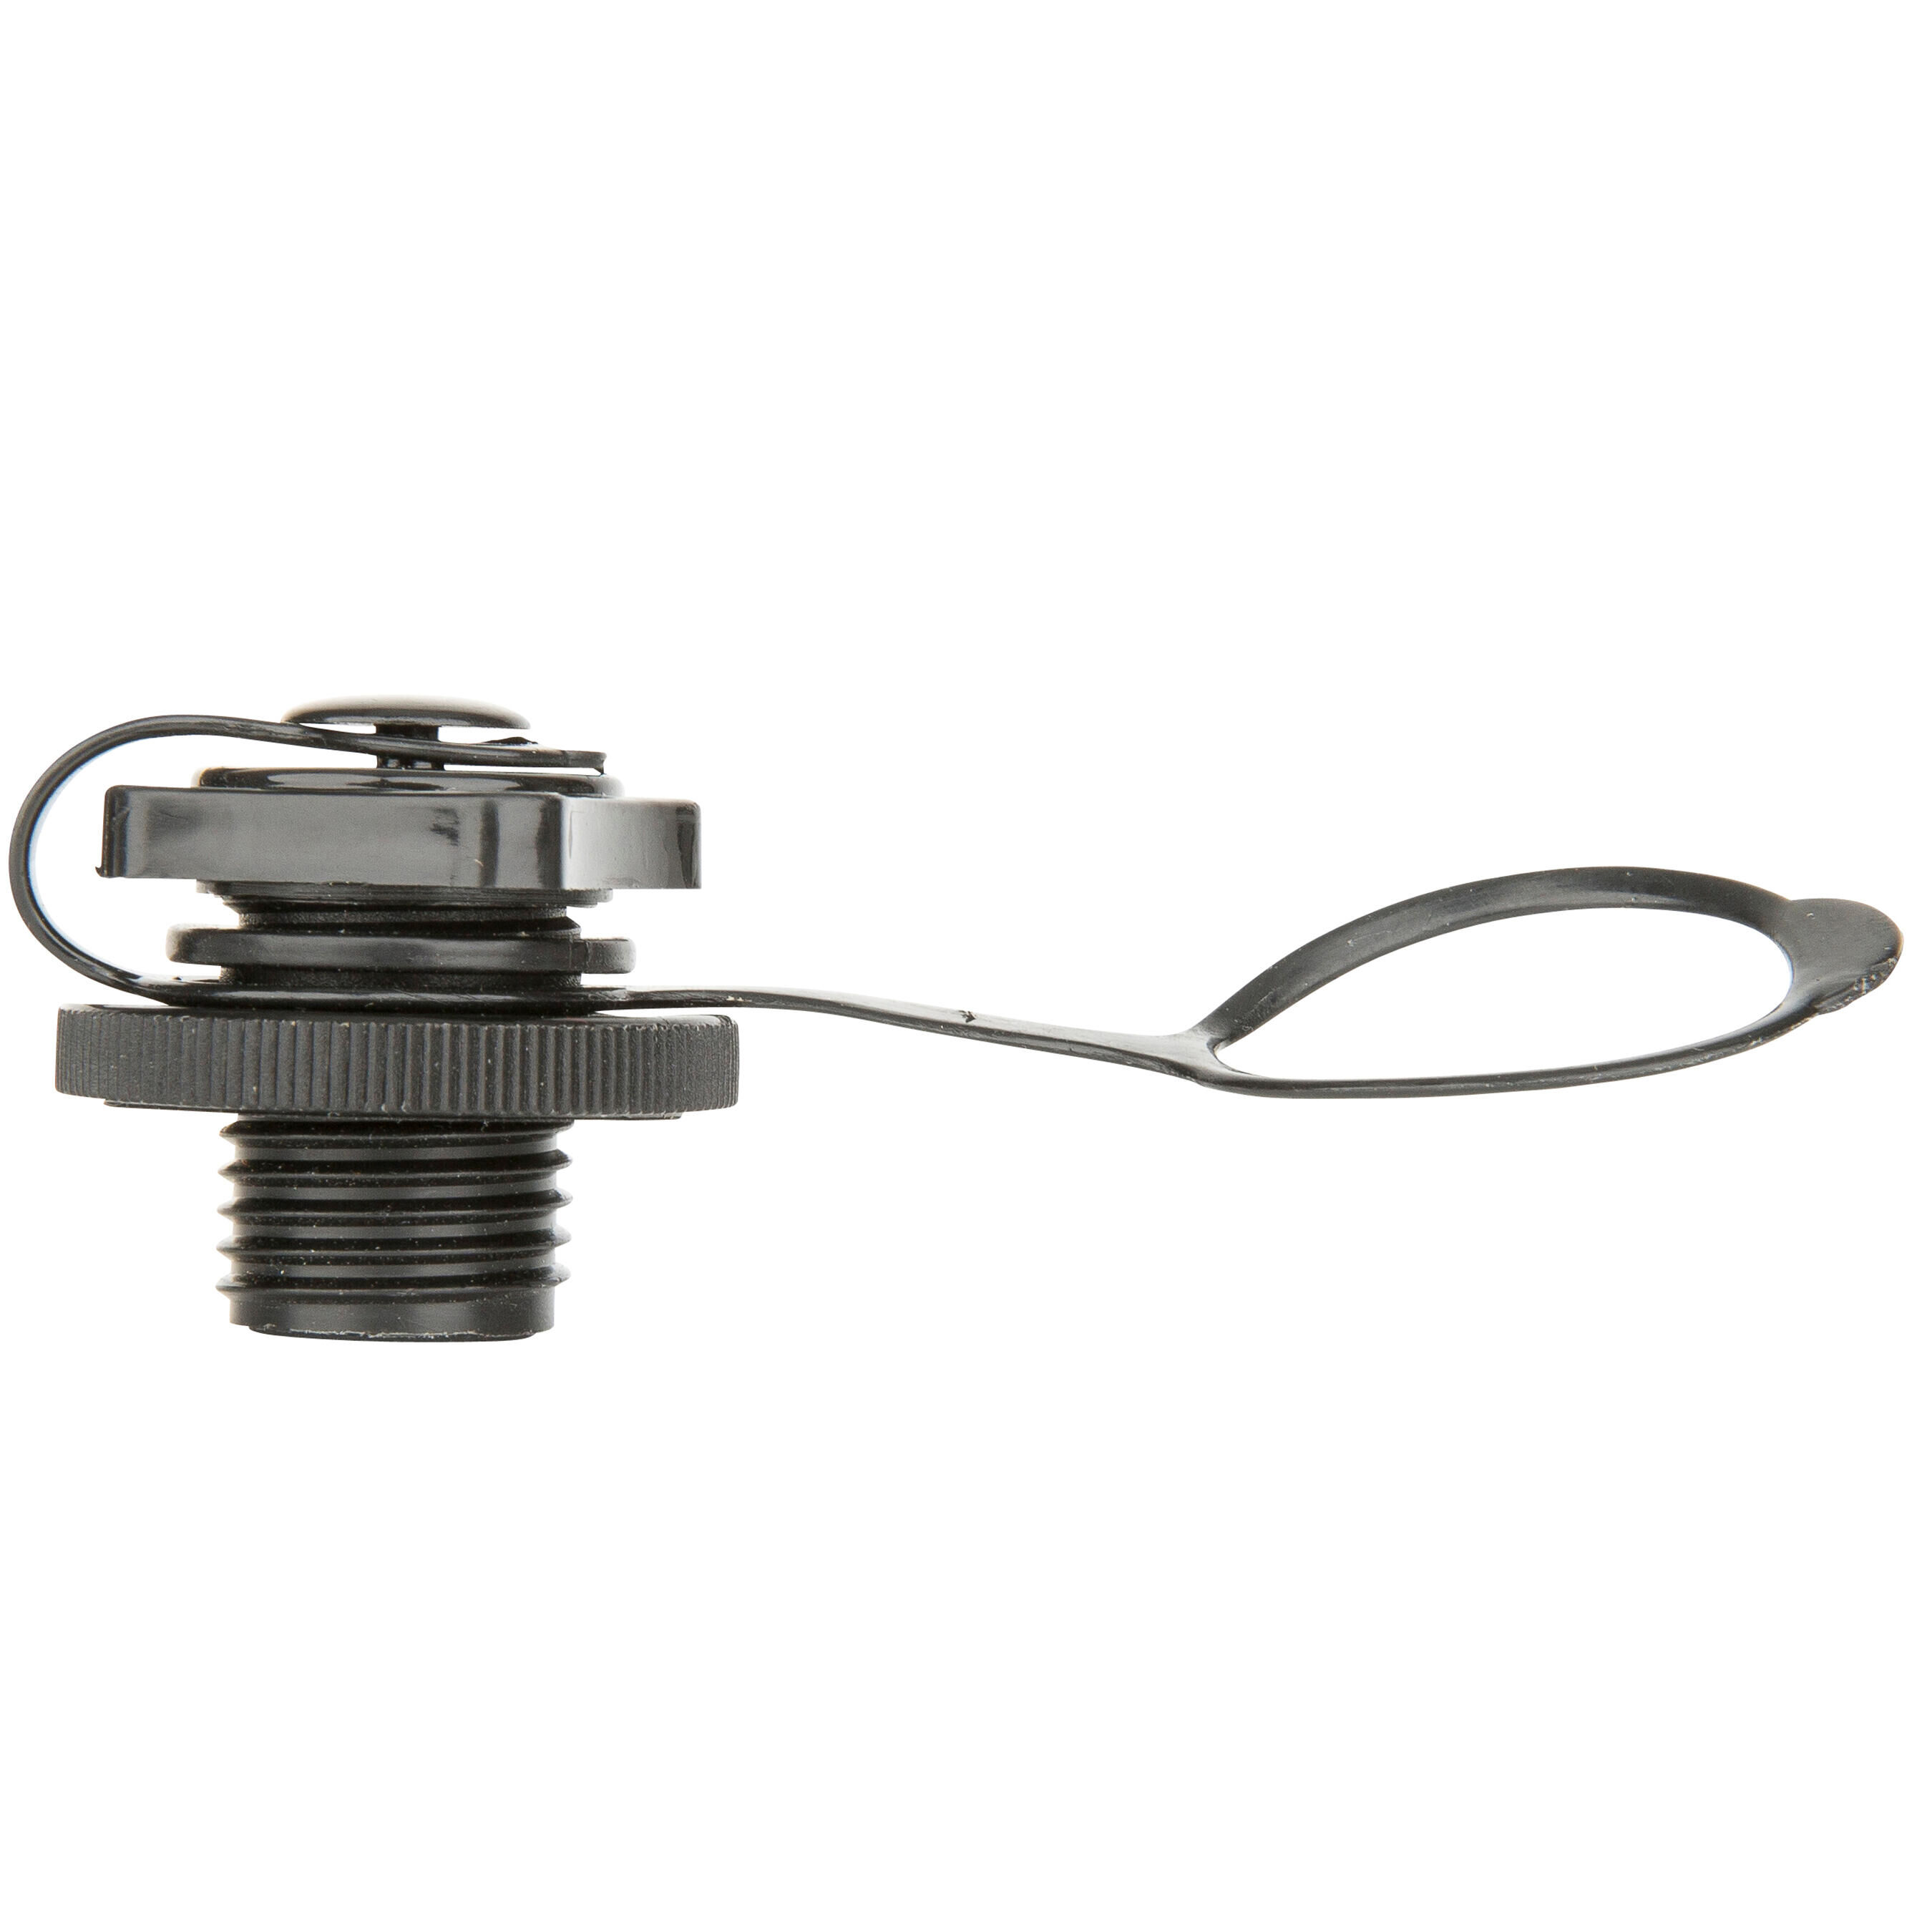 ITIWIT Small mini low-pressure valve Boston